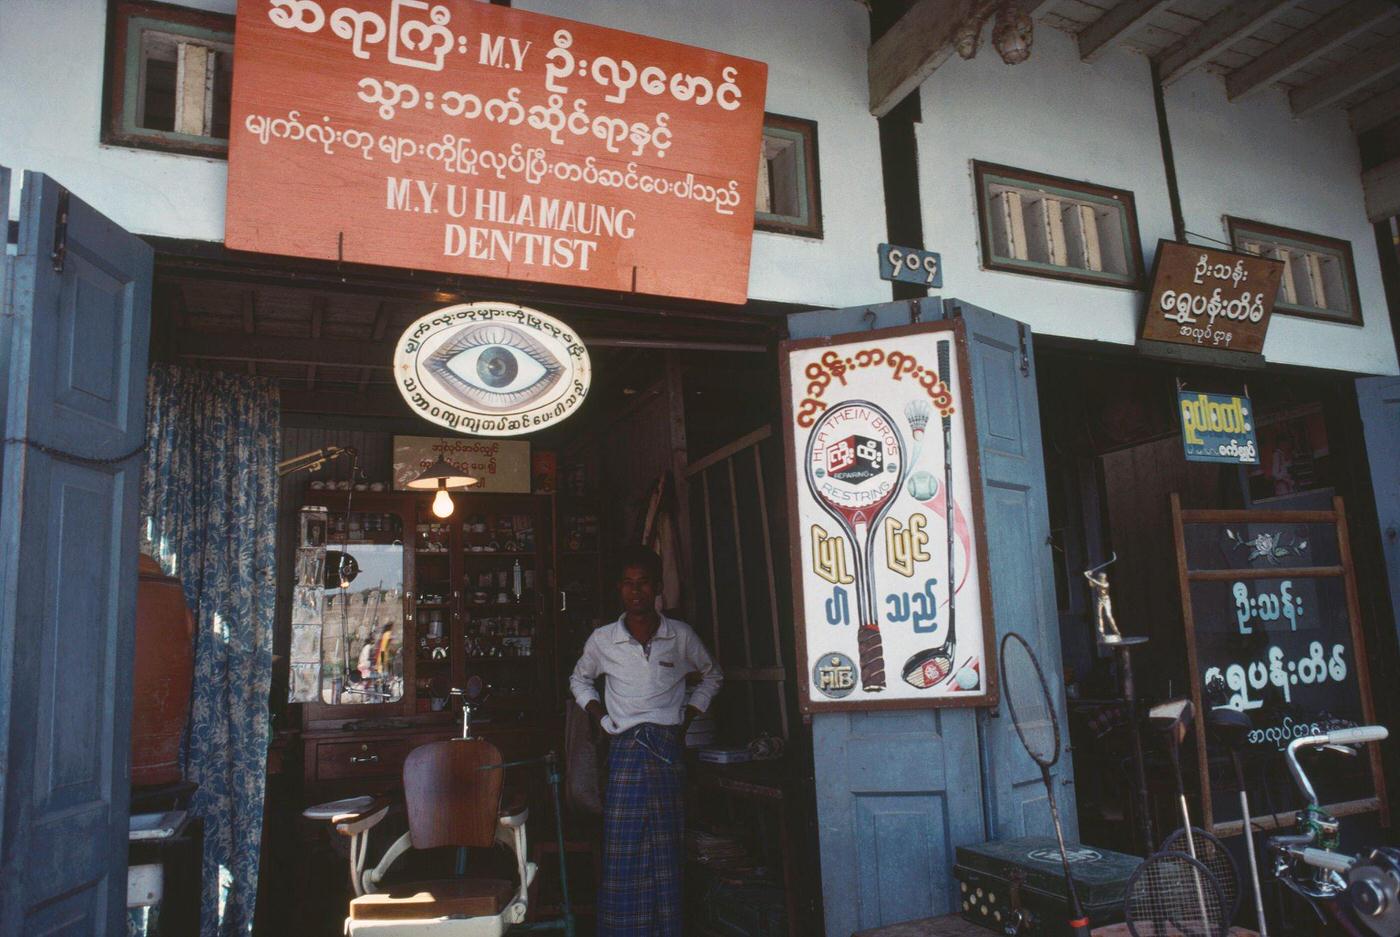 Premises of dentist M. Y. Uhlamaung in Mandalay, Burma, 1988.